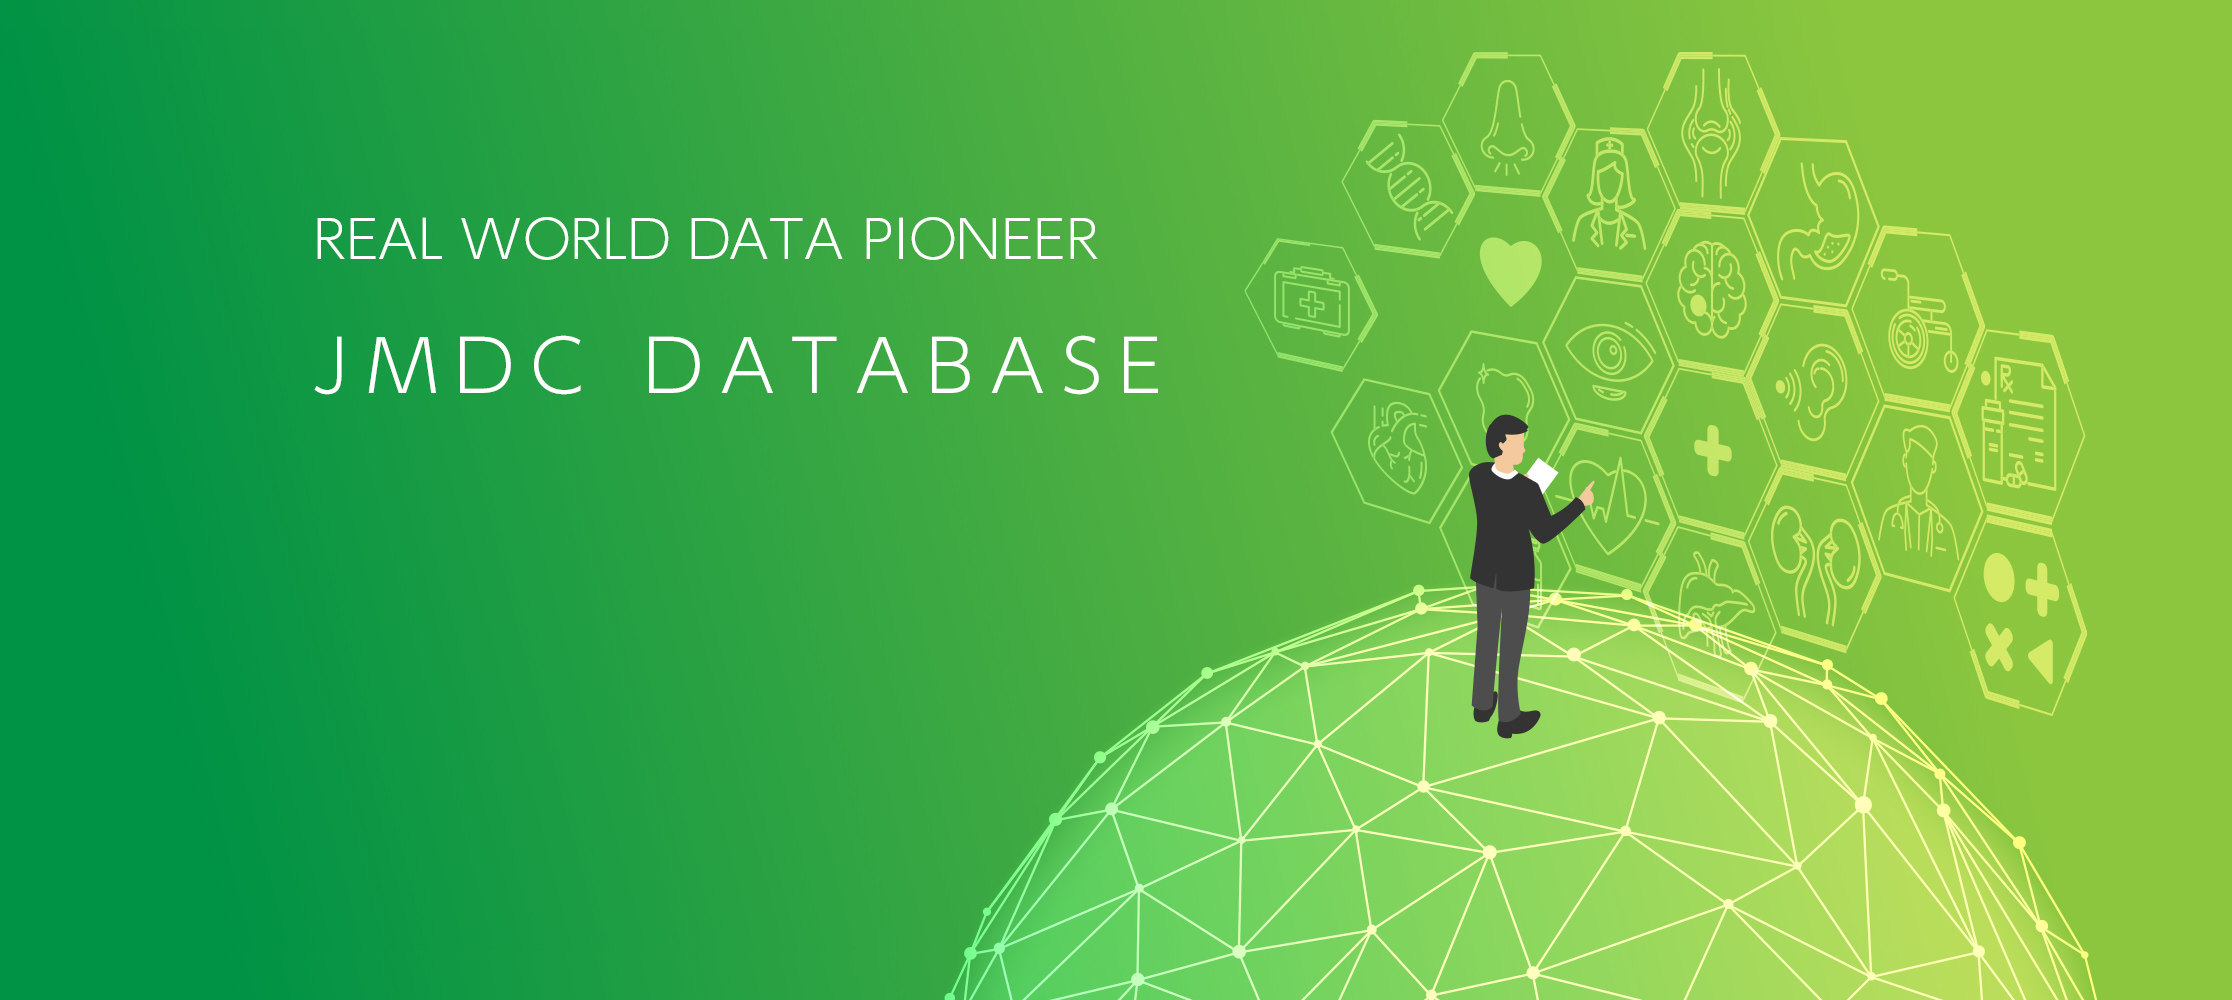 Pioneer of real world data JMDC database